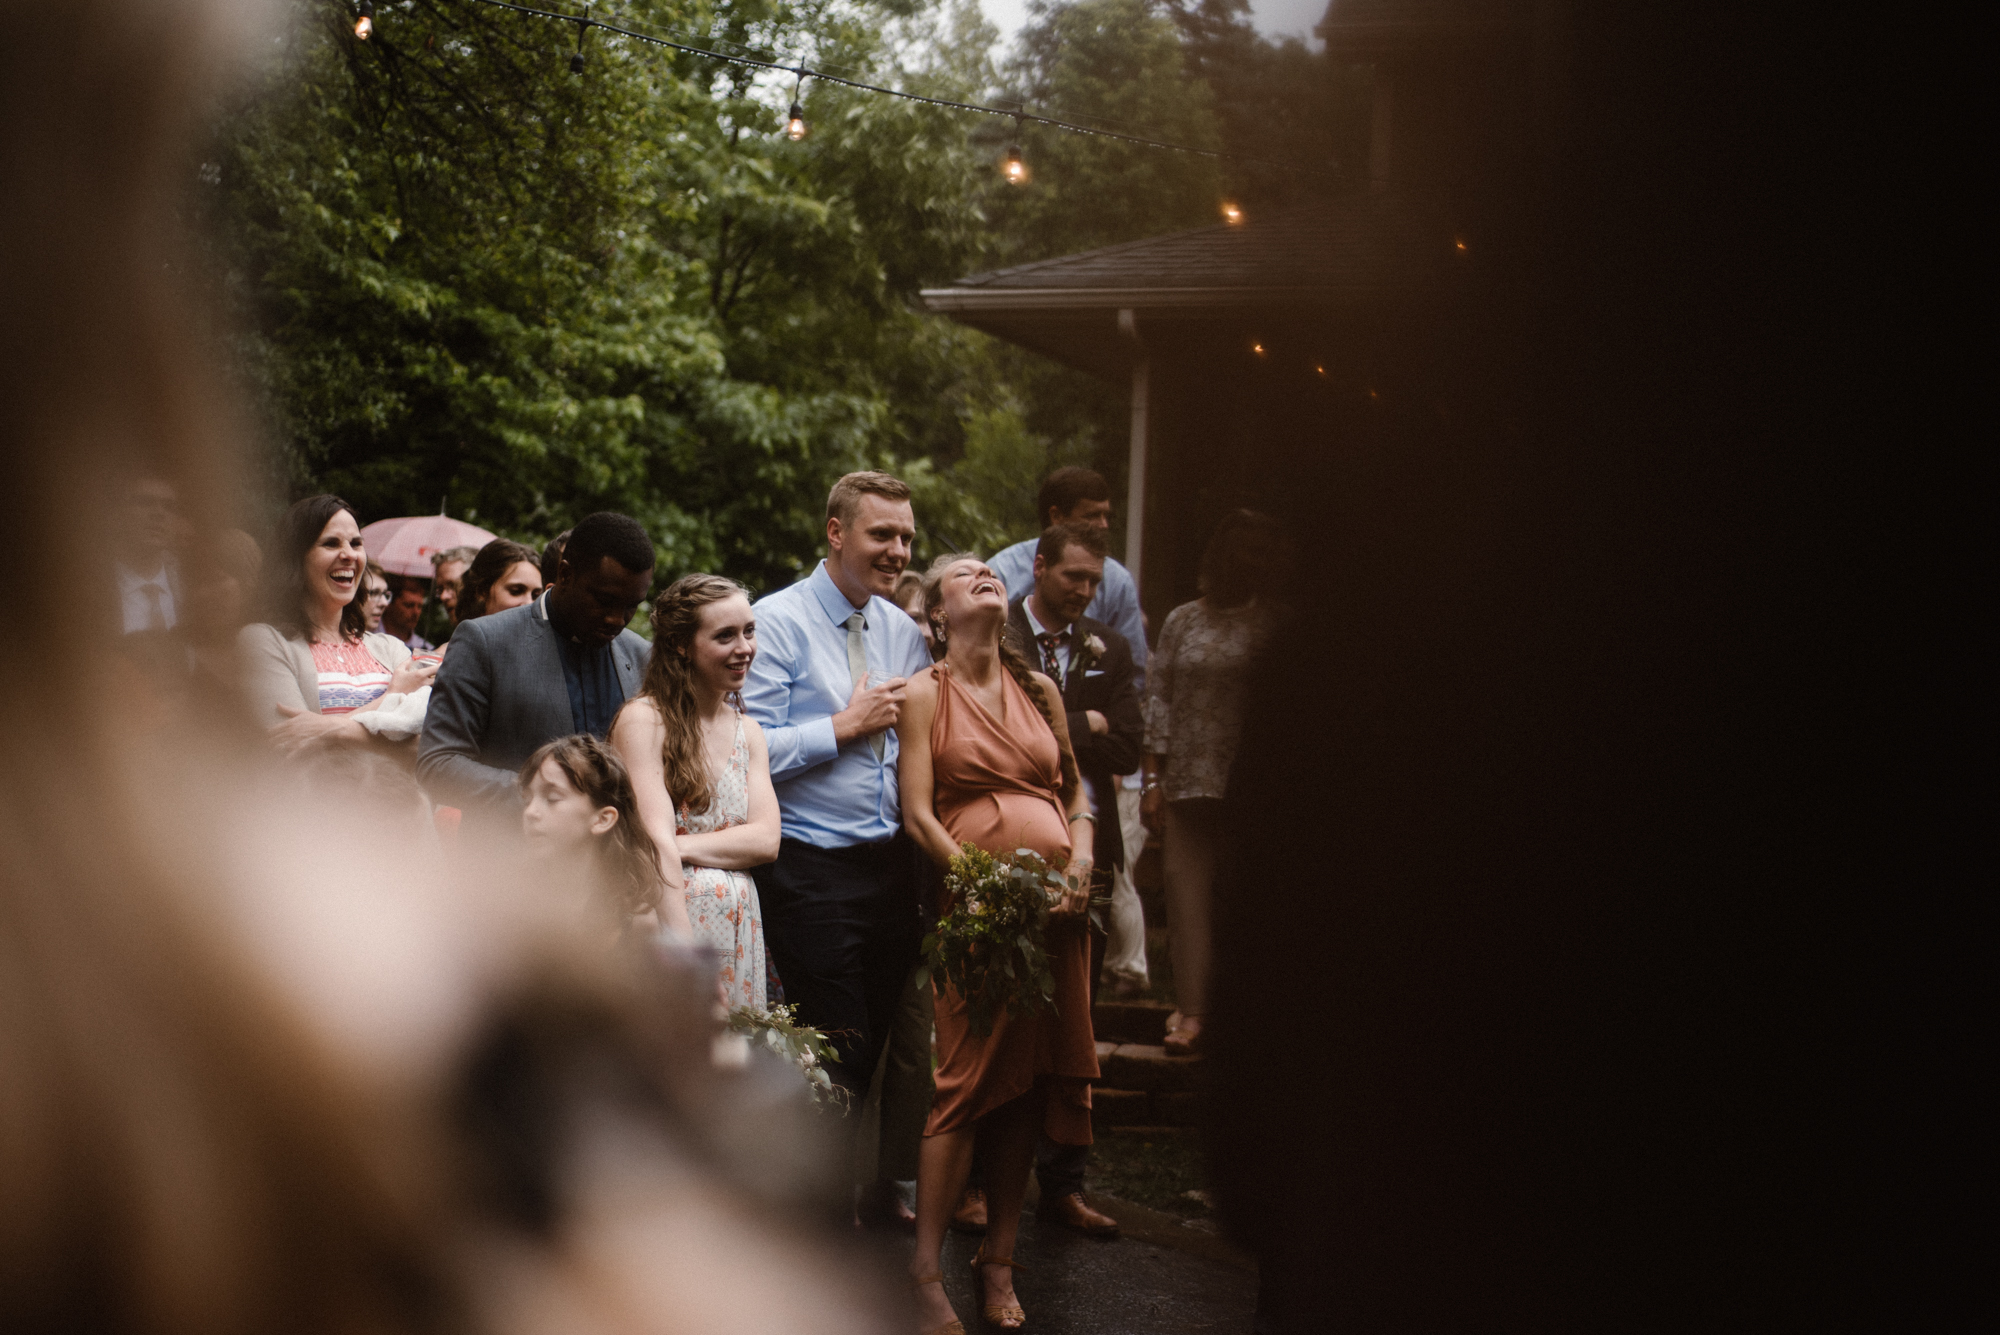 Mairi and Jude - Rainy Backyard Wedding - Intimate Wedding - Fun Reception Photos - Chicago Wedding Photographer - Catholic Wedding - White Sails Creative - Virginia Backyard Wedding Photographer_49.jpg